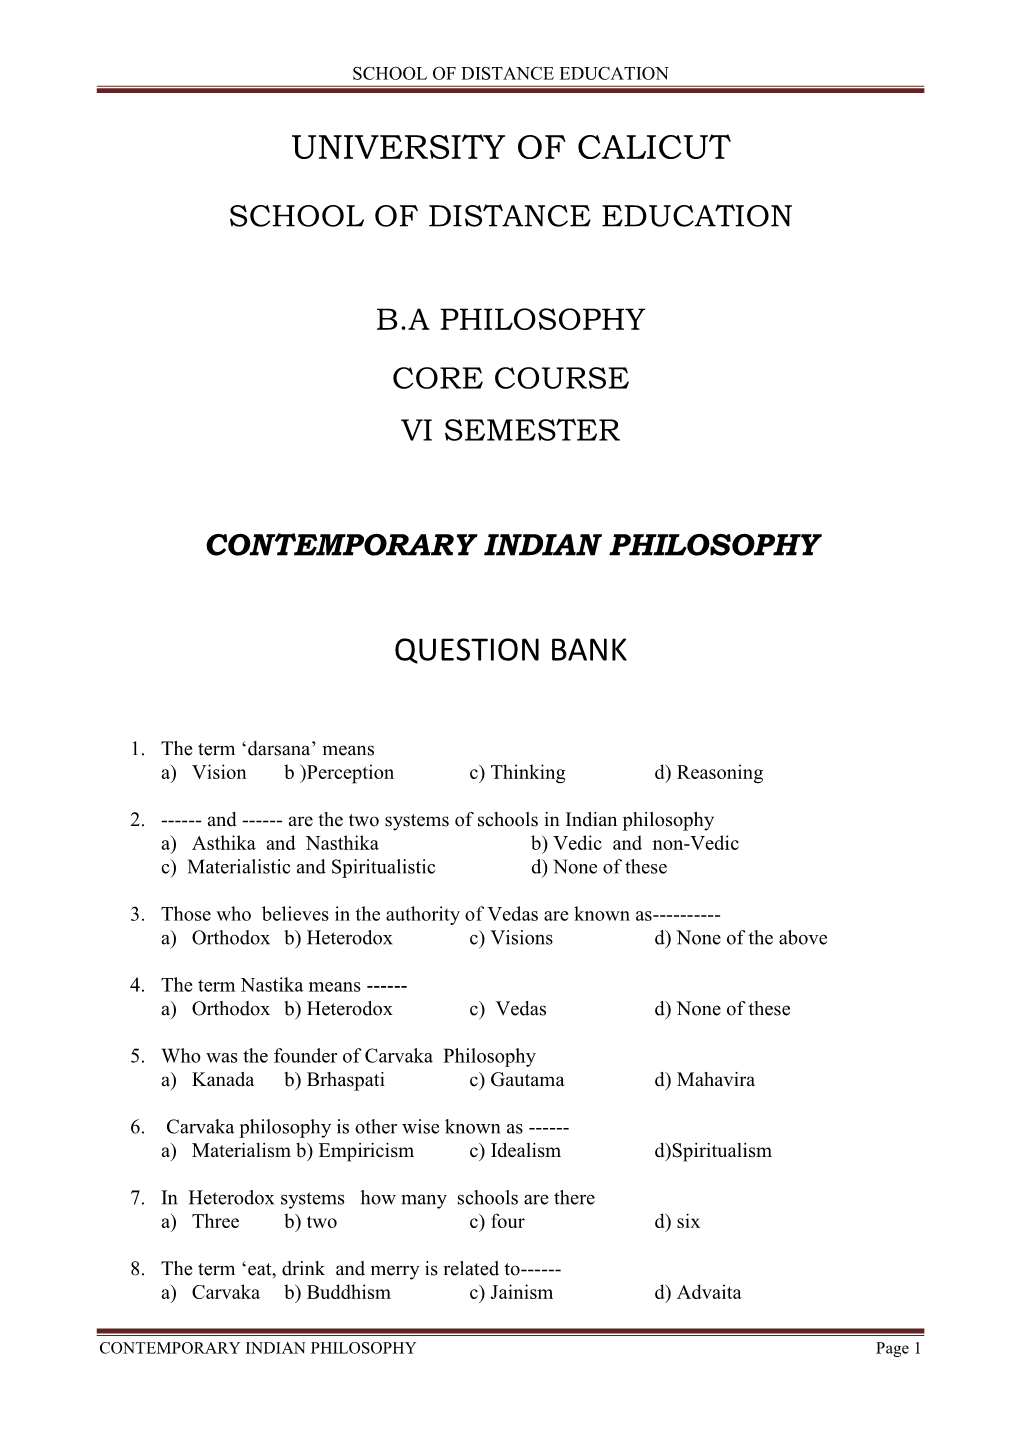 School of Distance Education Ba Philosophy Core Course Vi Semester Contemporary Indian Philosophy